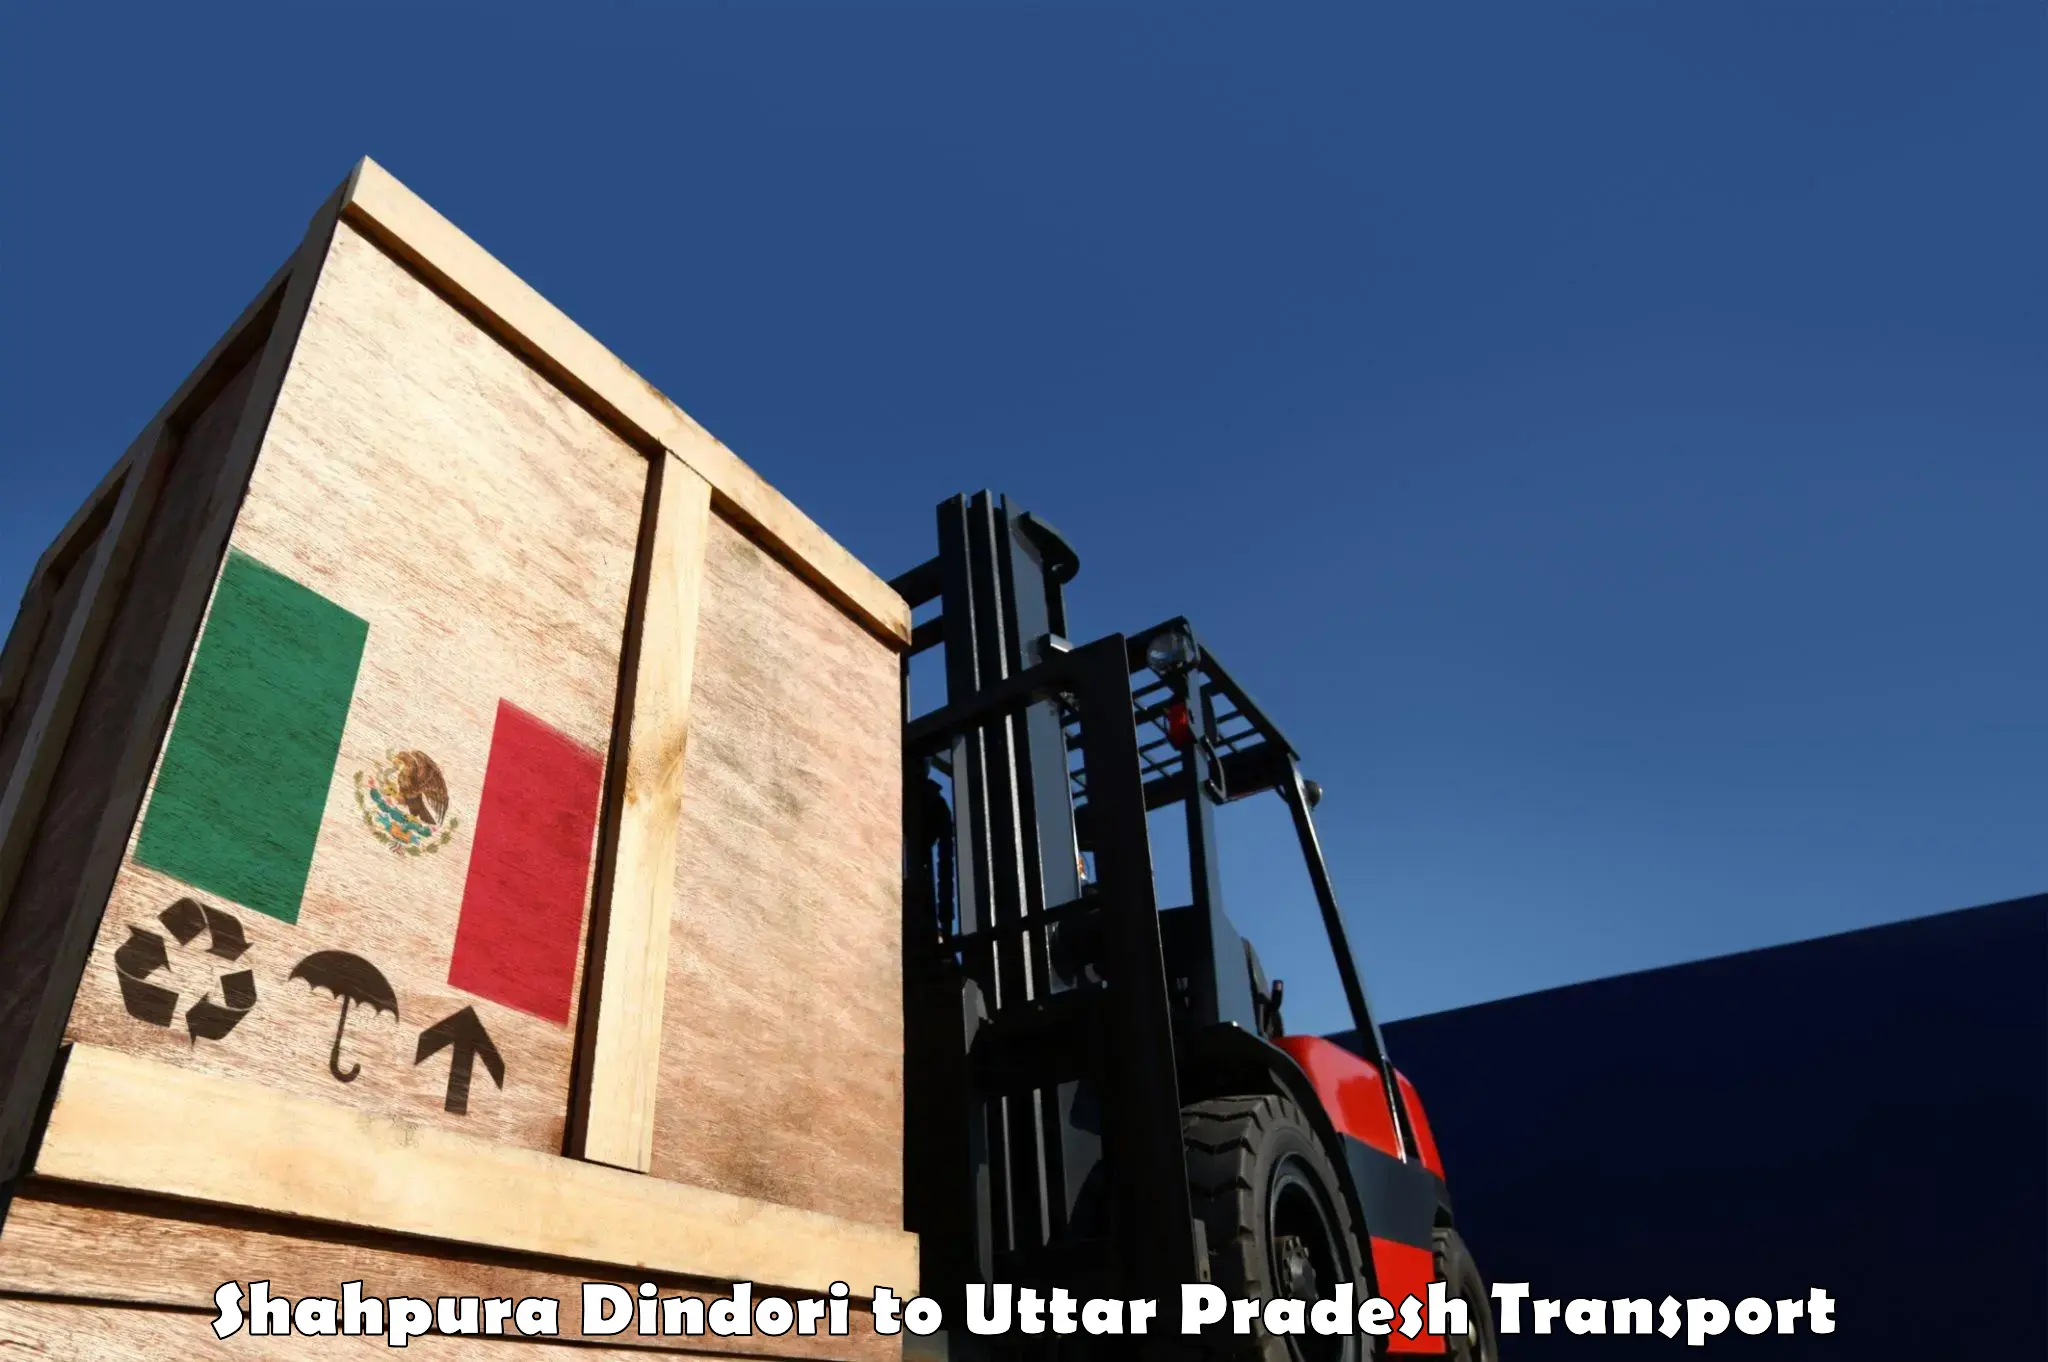 Truck transport companies in India Shahpura Dindori to Jalalpur